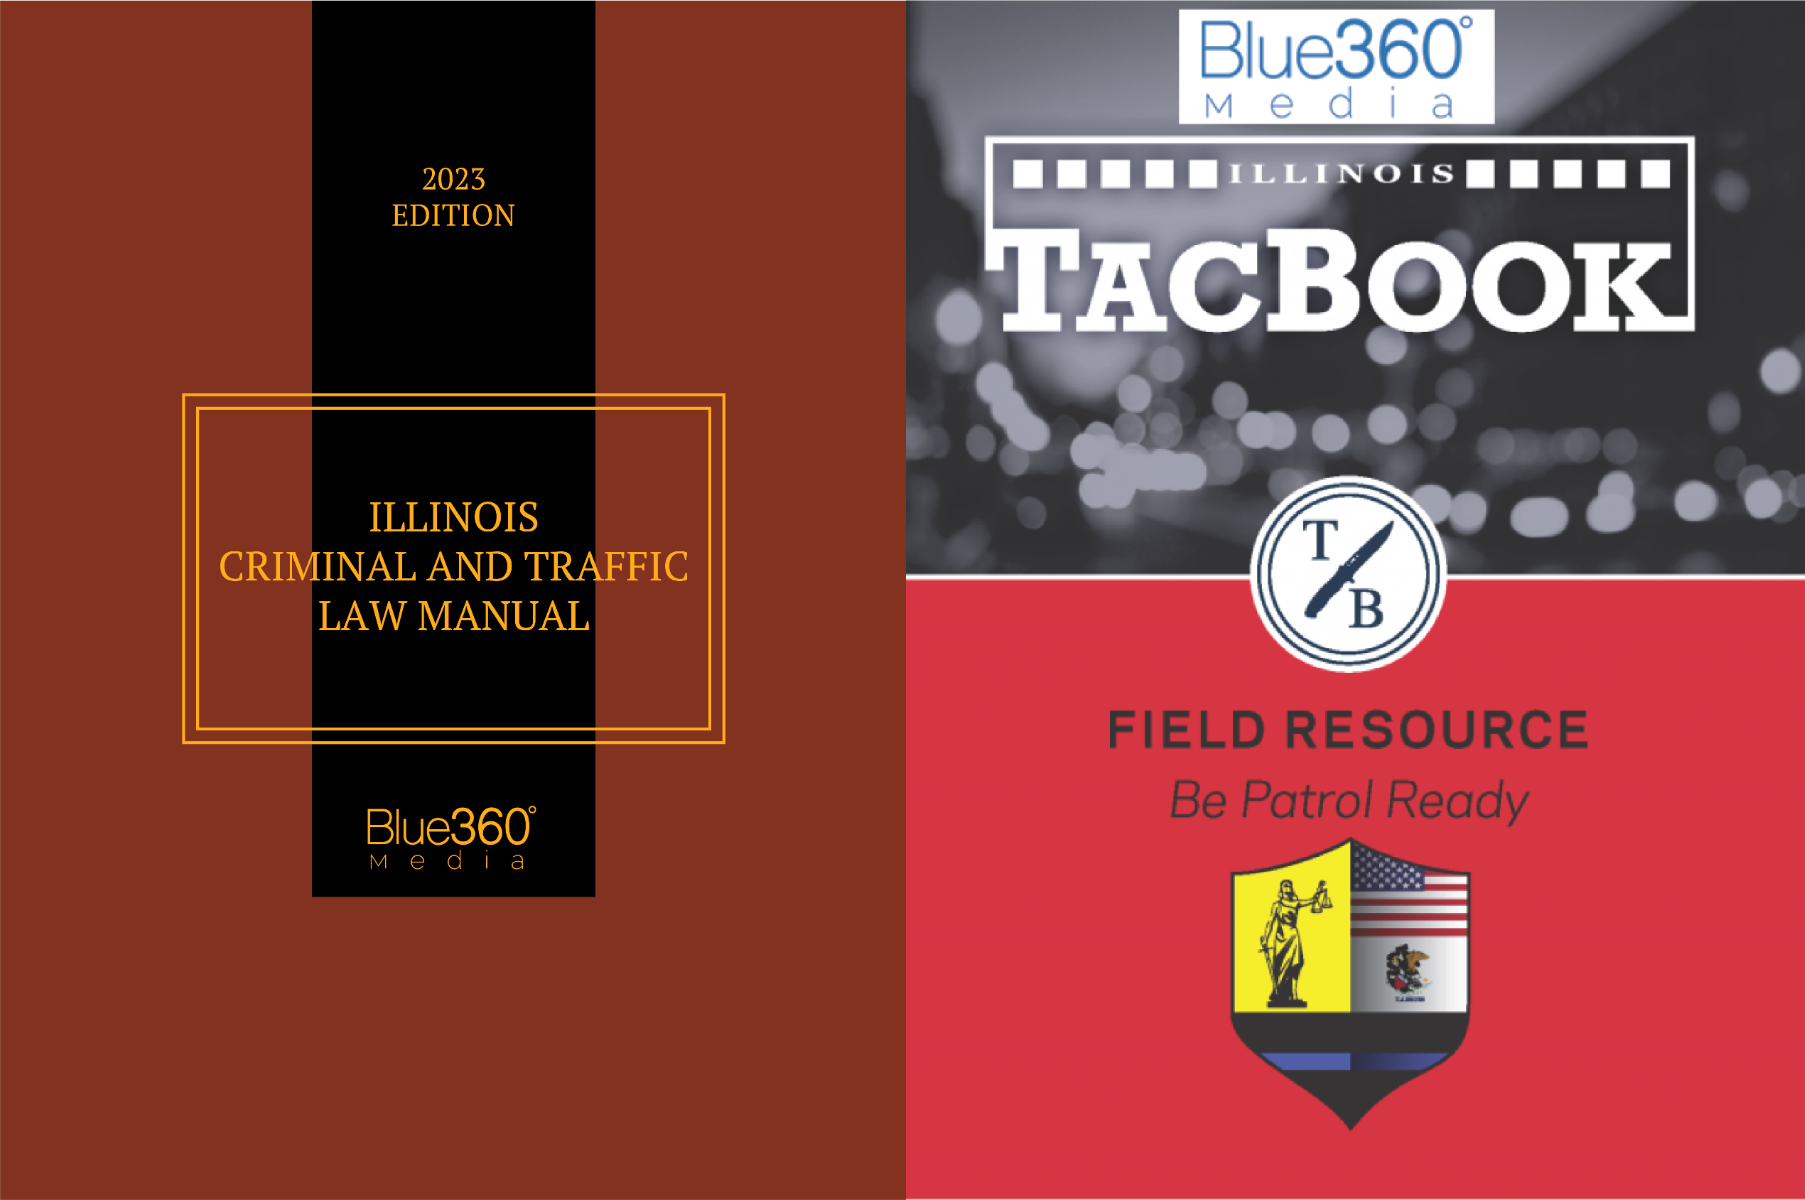 Illinois Criminal & Traffic Law Manual + Digital TacBook: 2023 Edition